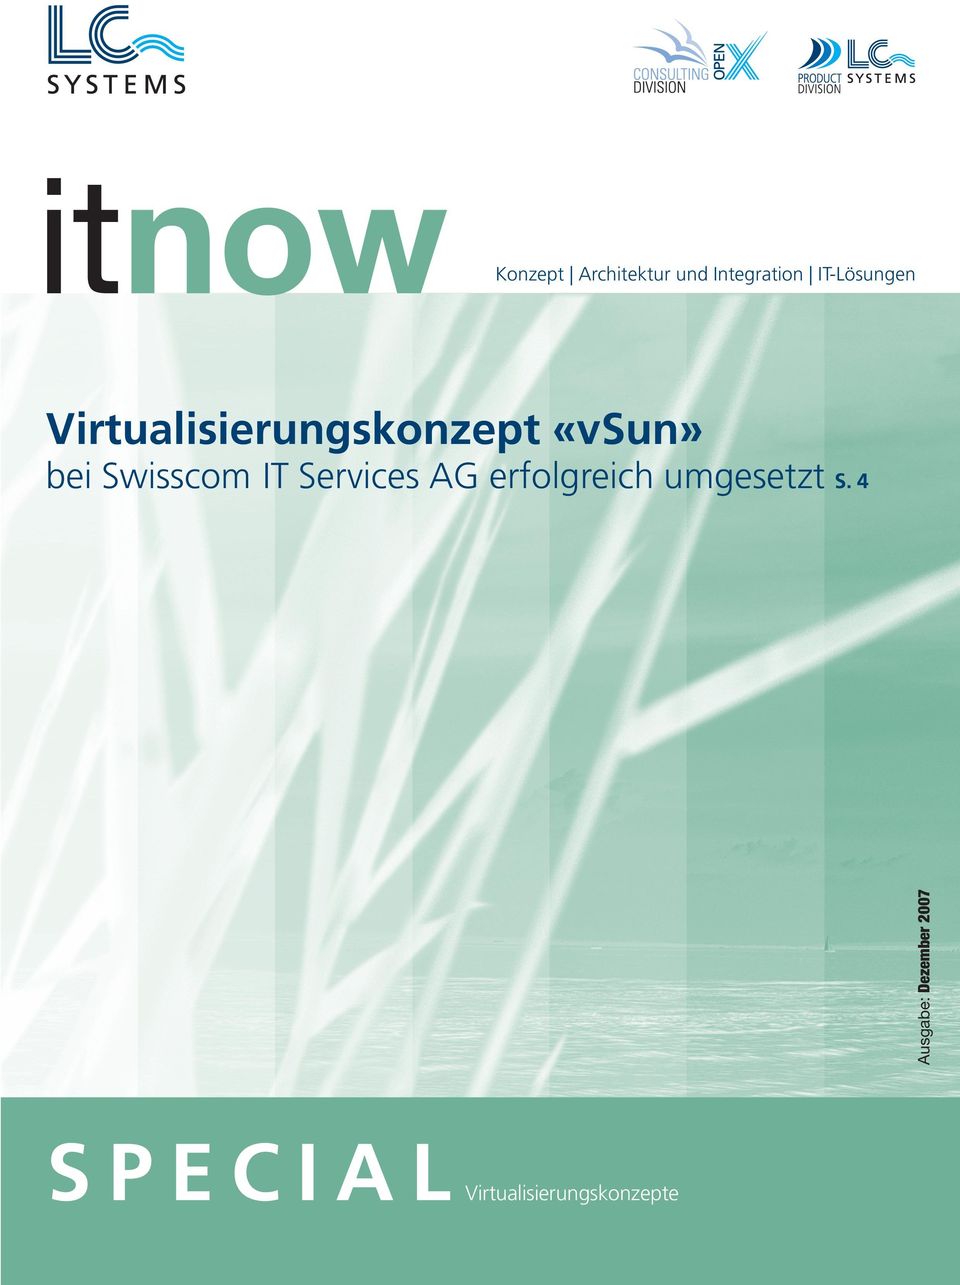 Swisscom IT Services AG erfolgreich umgesetzt S.